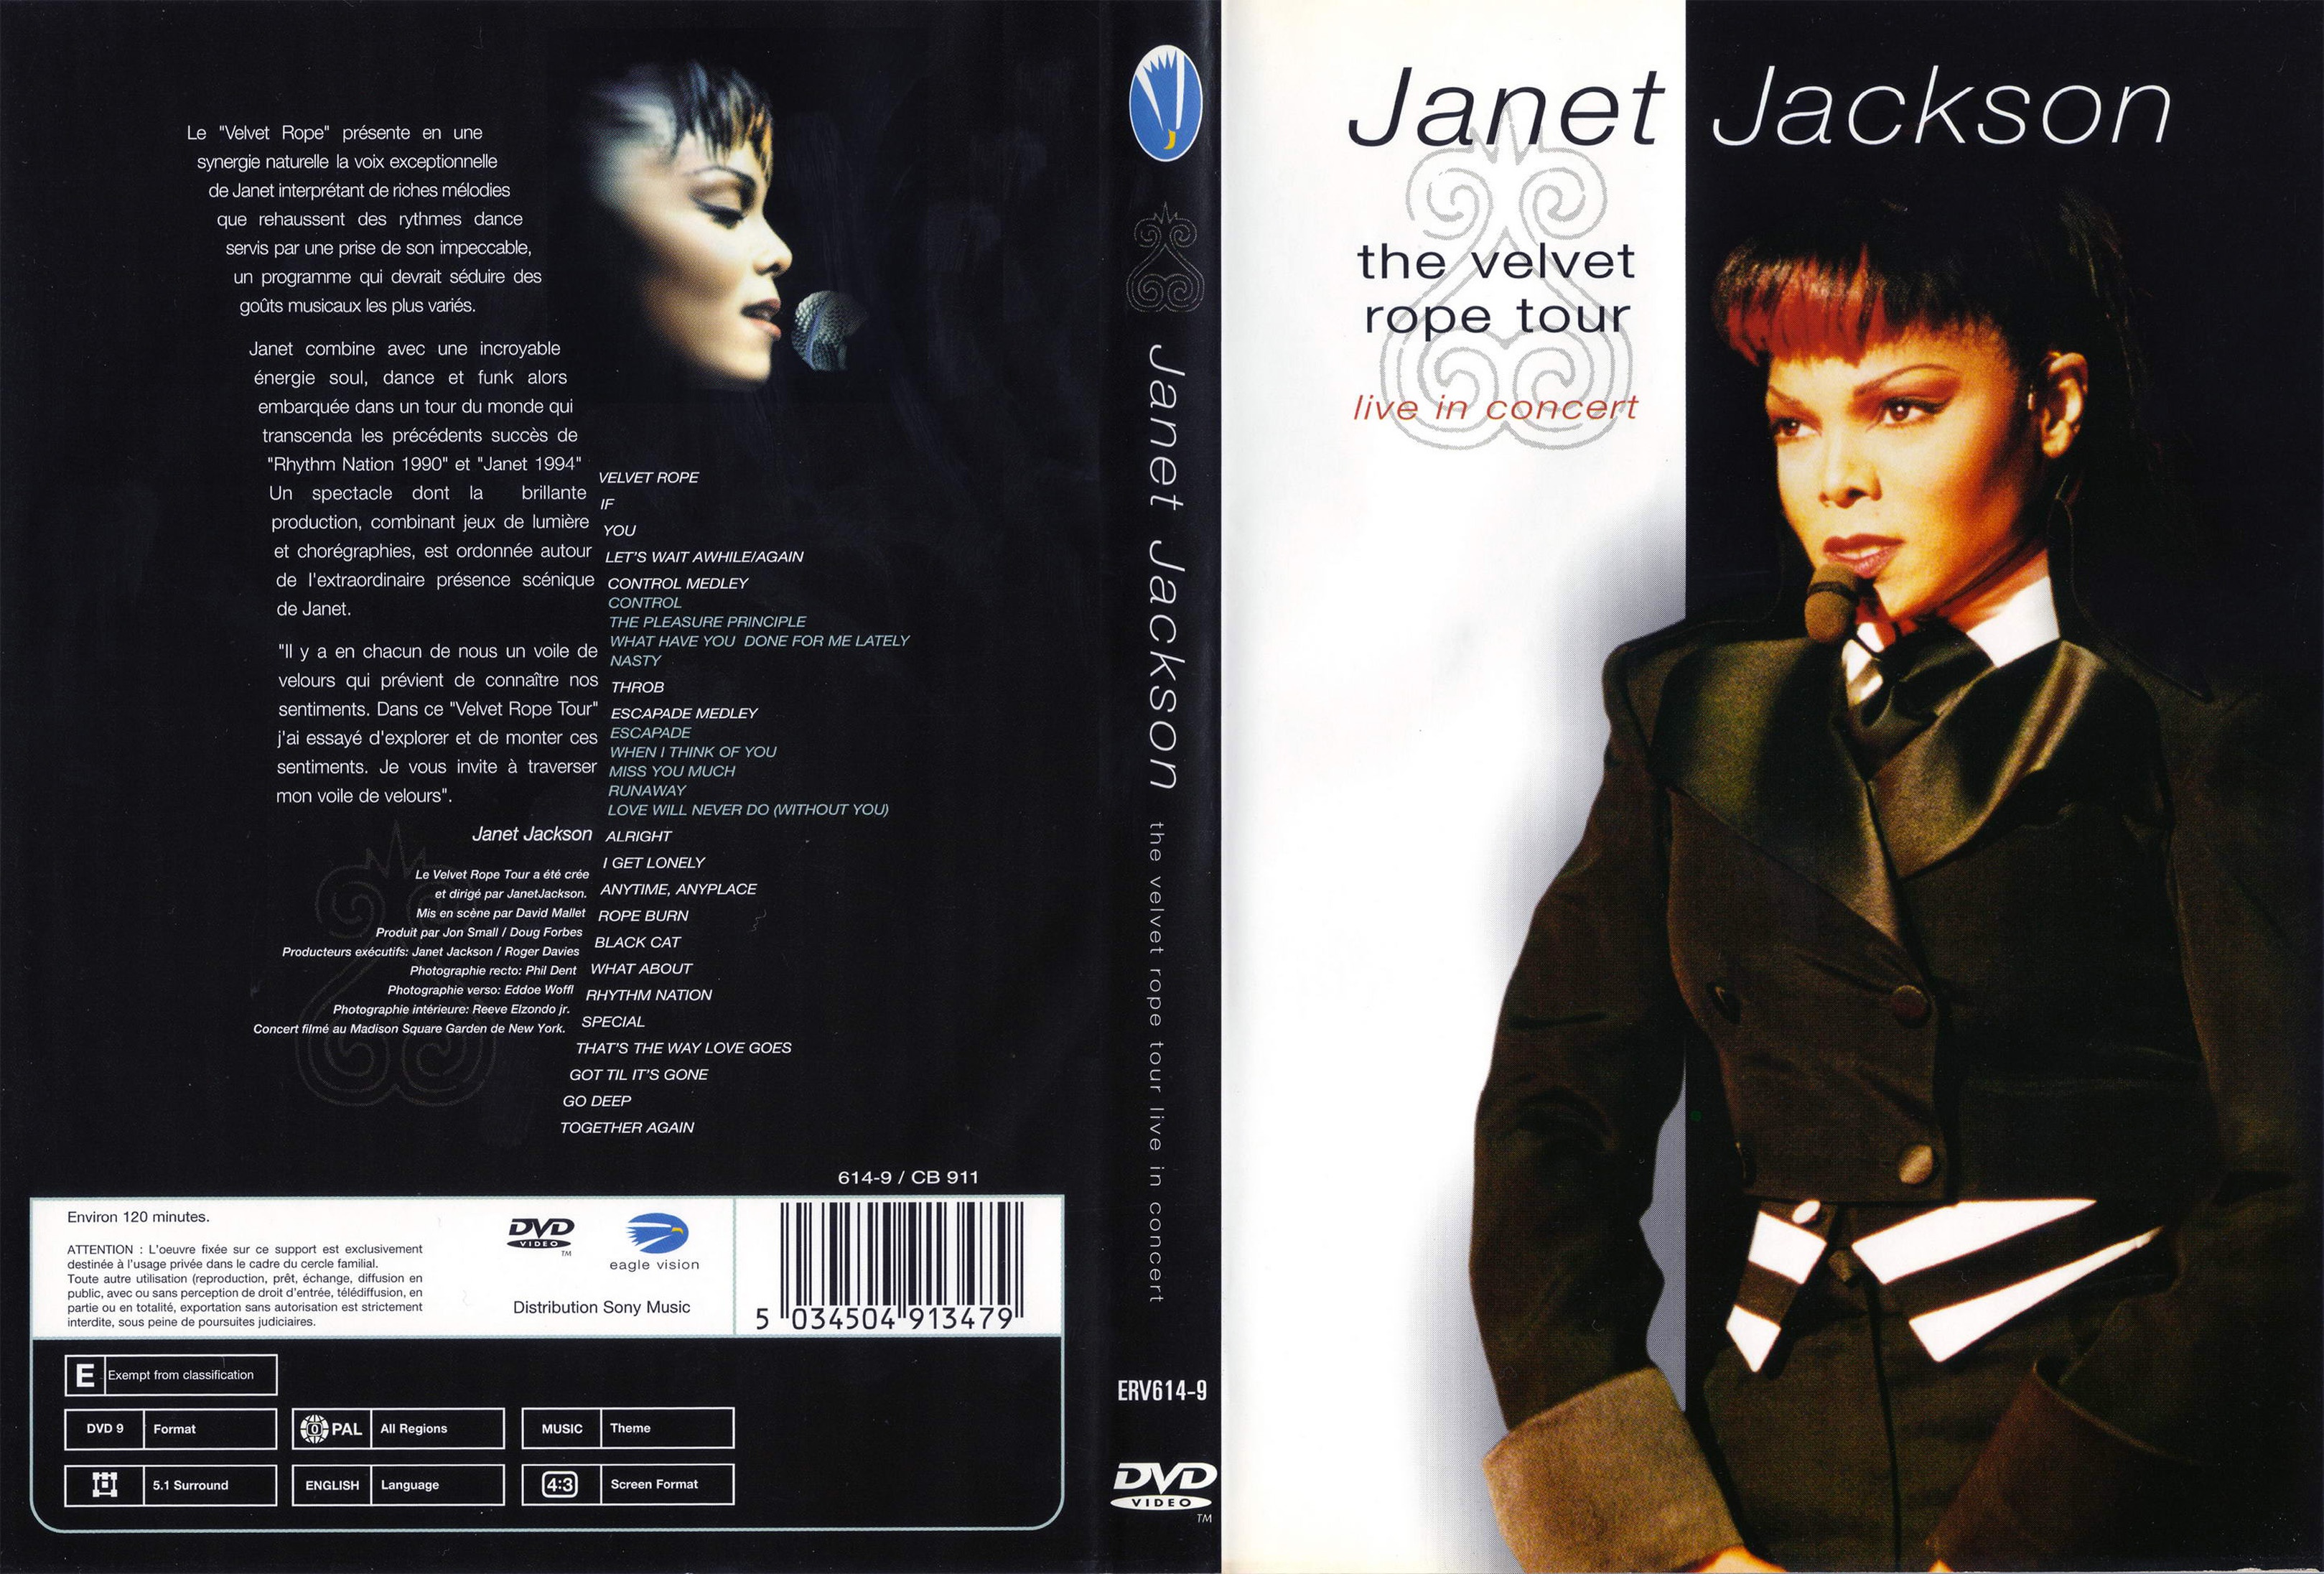 Jaquette DVD Janet Jackson The velvet rope tour